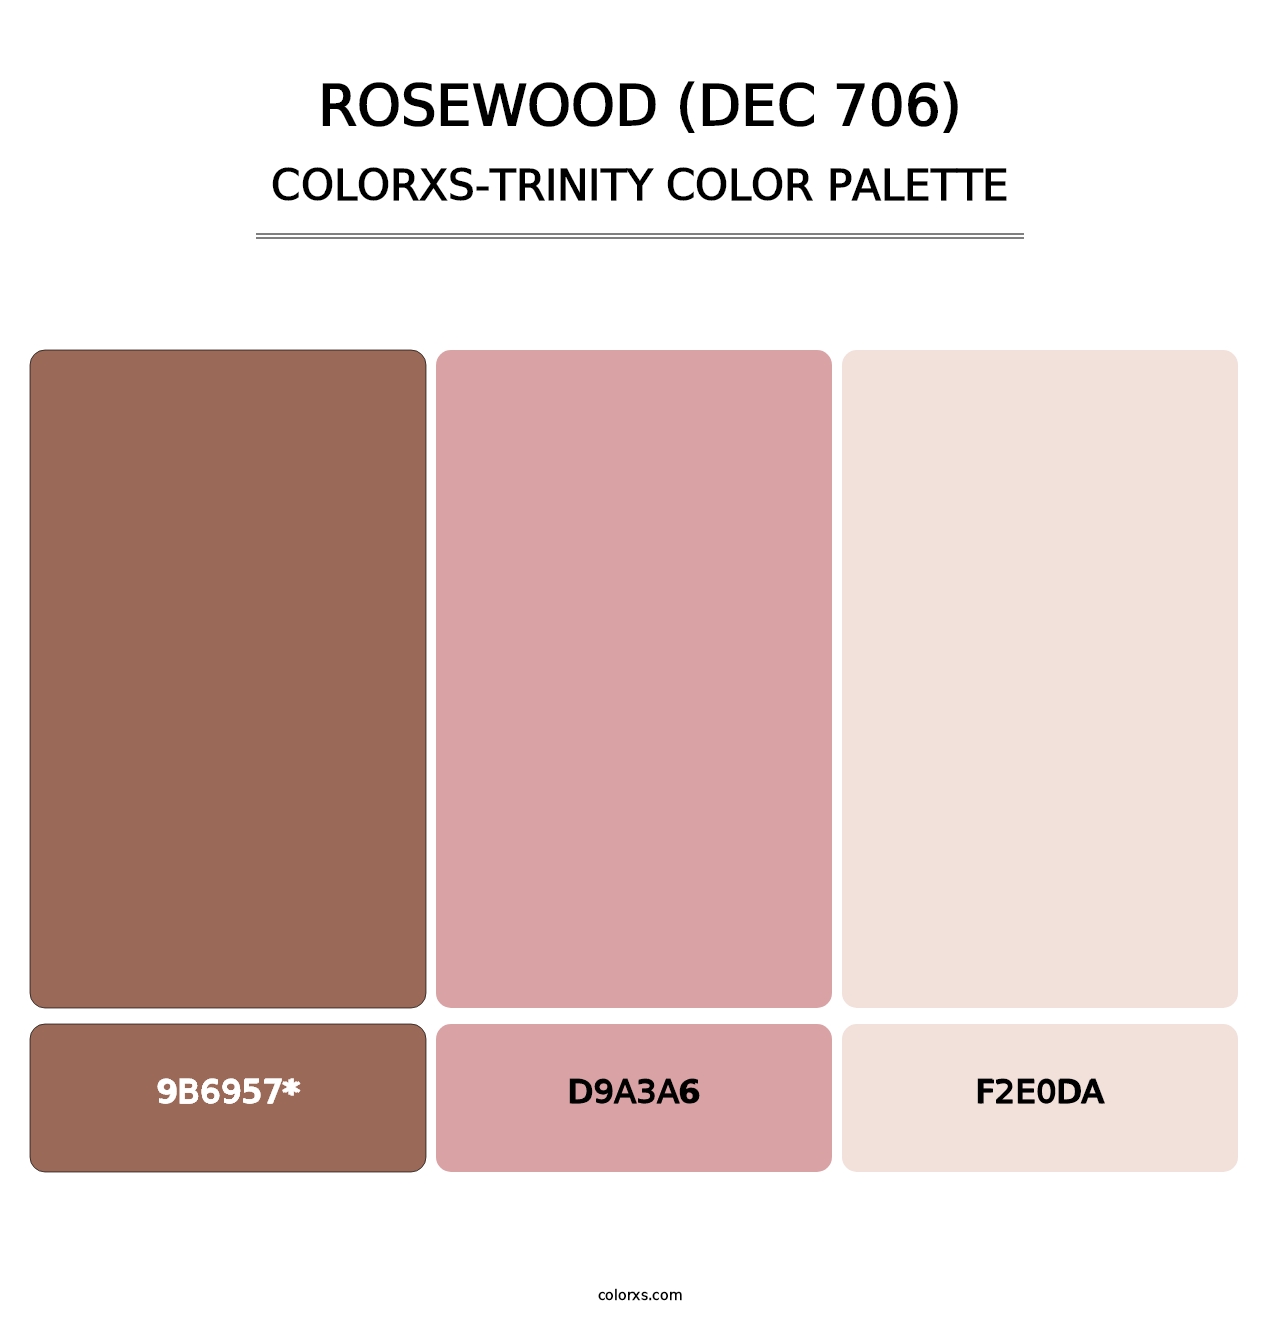 Rosewood (DEC 706) - Colorxs Trinity Palette